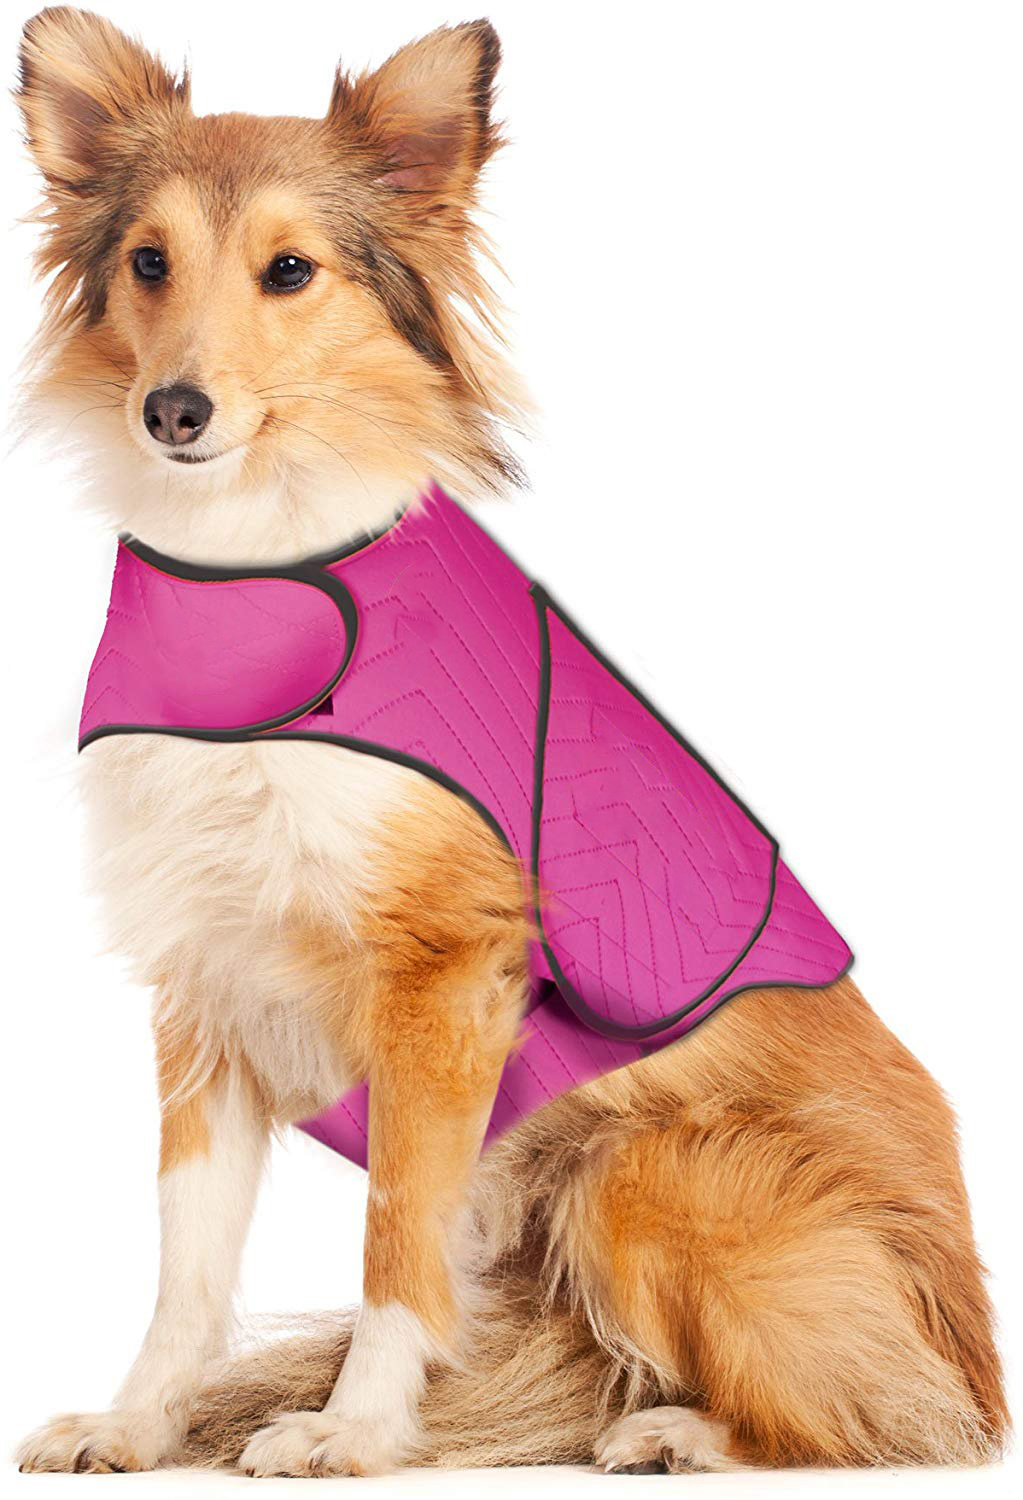 Dog Anxiety Jacket Vet Recommended Calming Solution Vest for Fireworks, Thunder, Travel, & Separation